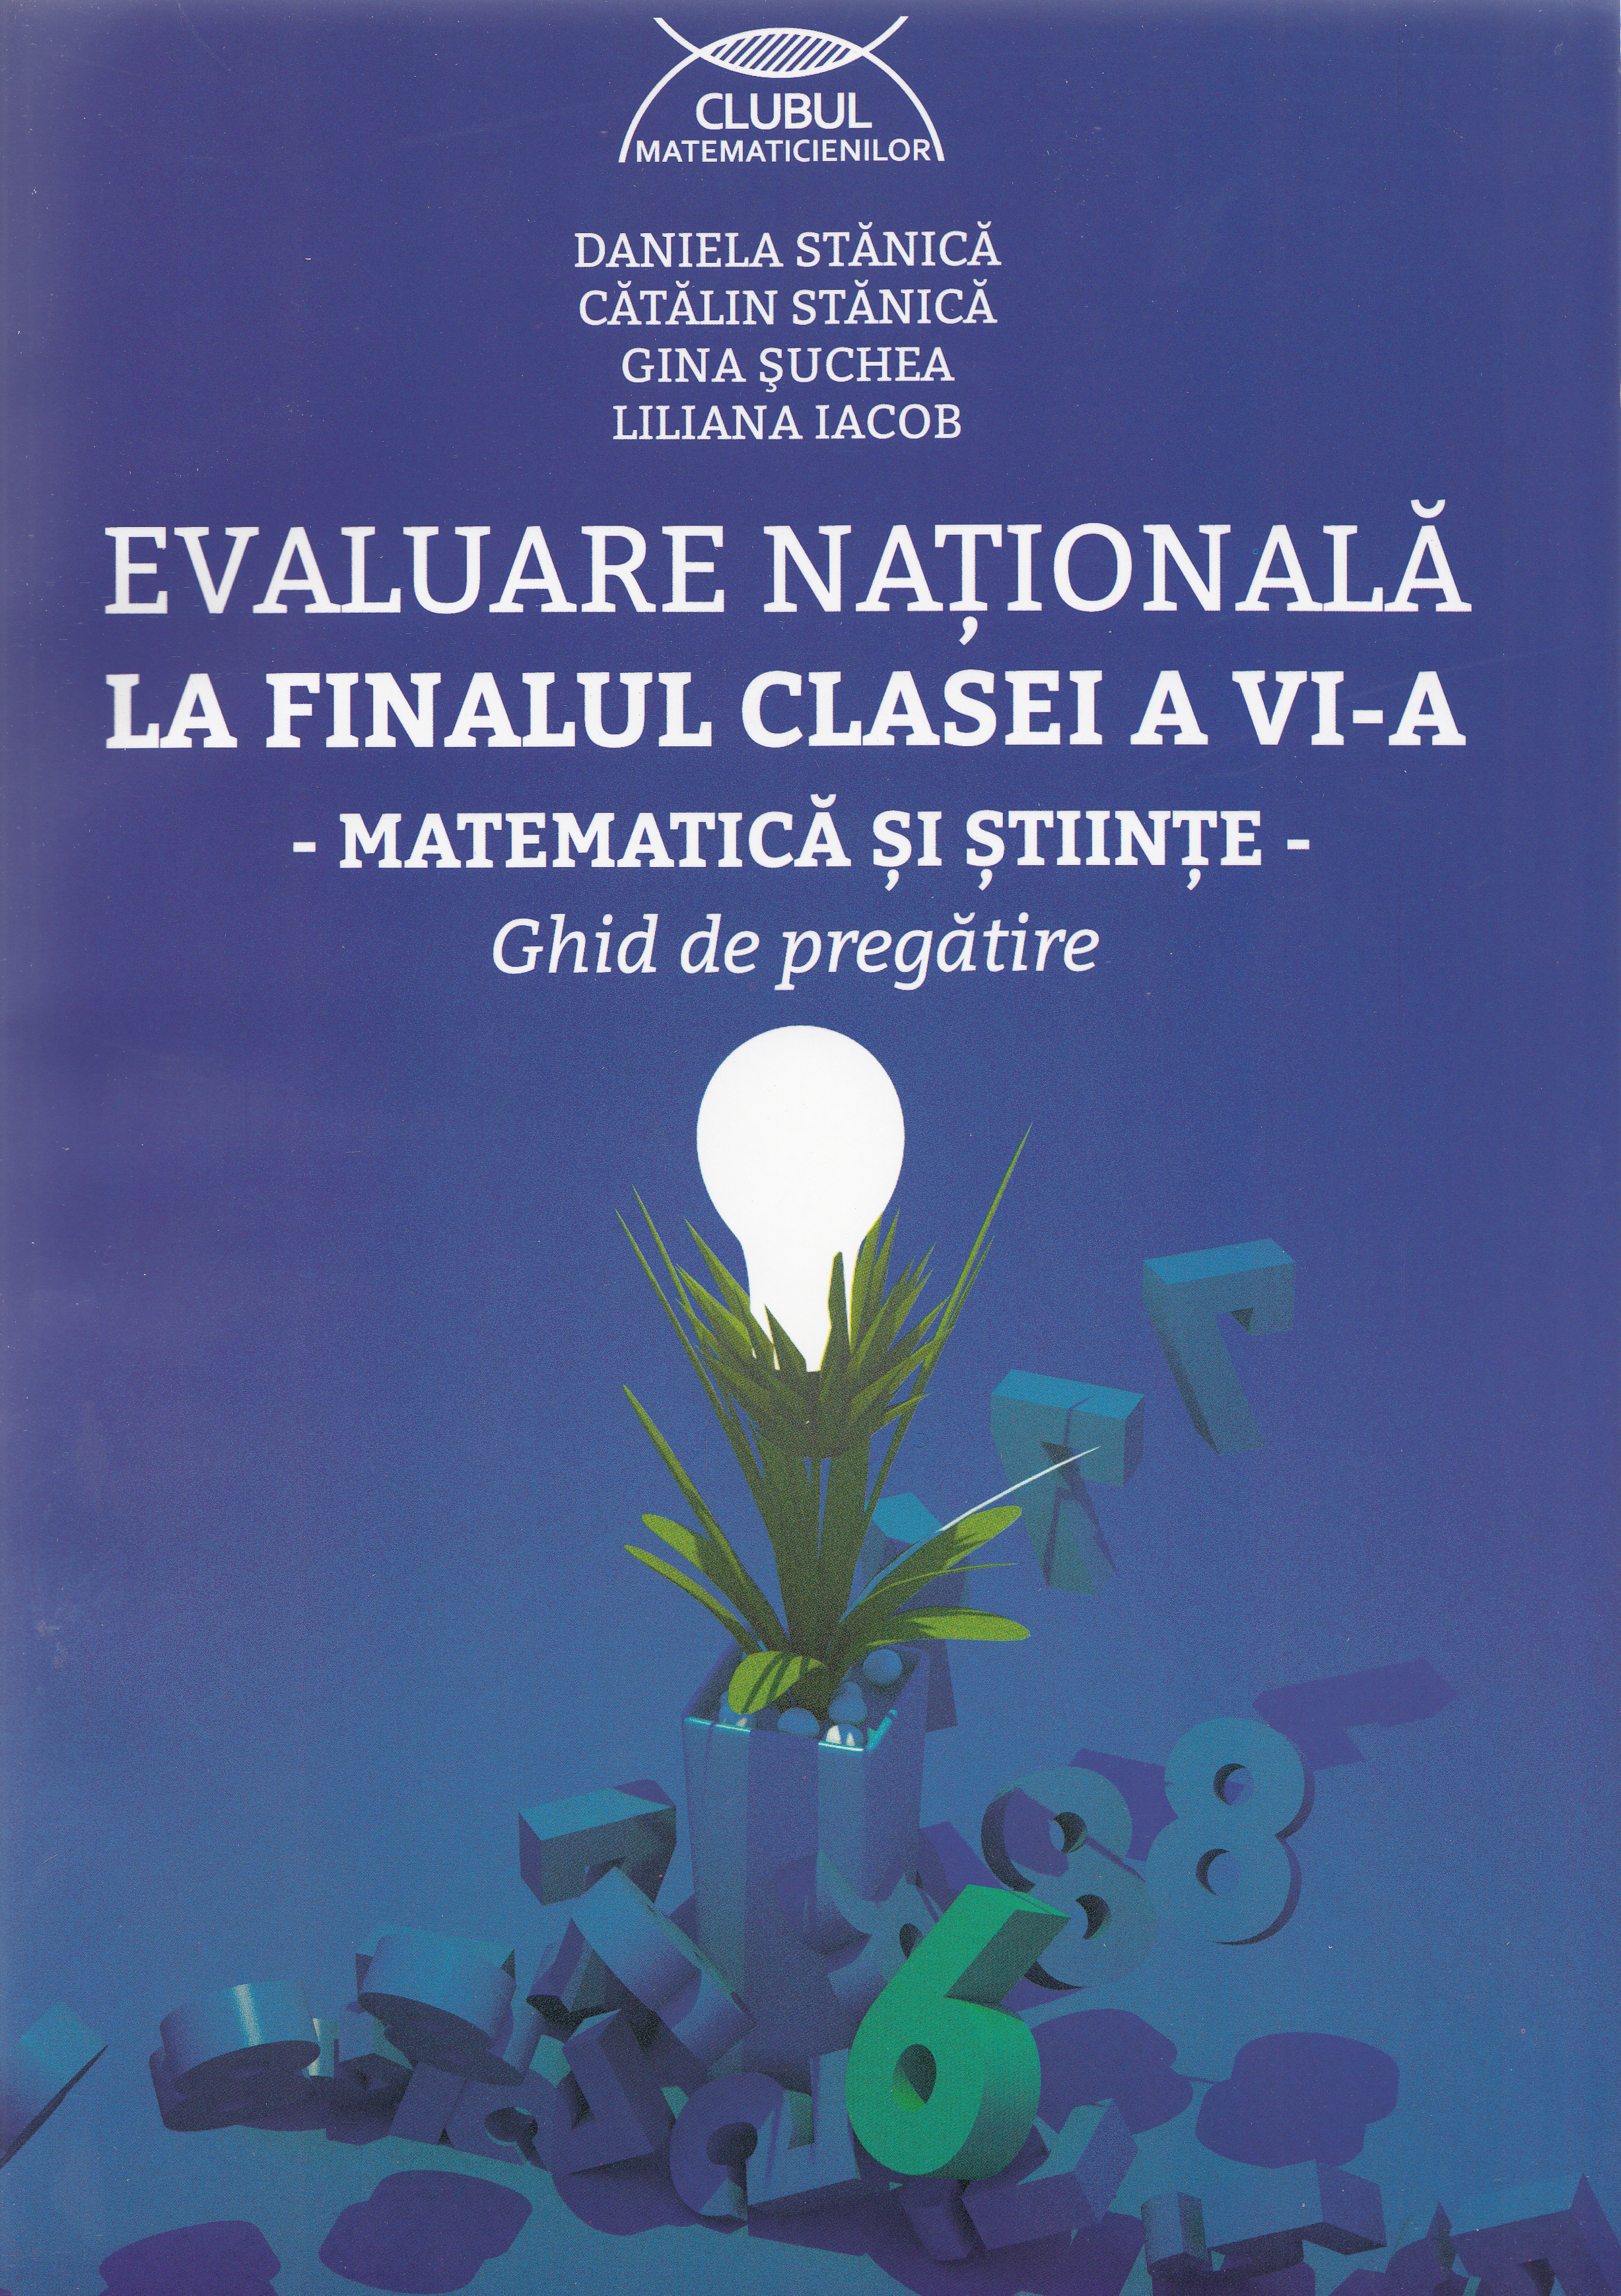 Evaluare nationala la finalul - Clasa 6 - Matematica si stiinte. Ghid de pregatire - Daniela Stanica